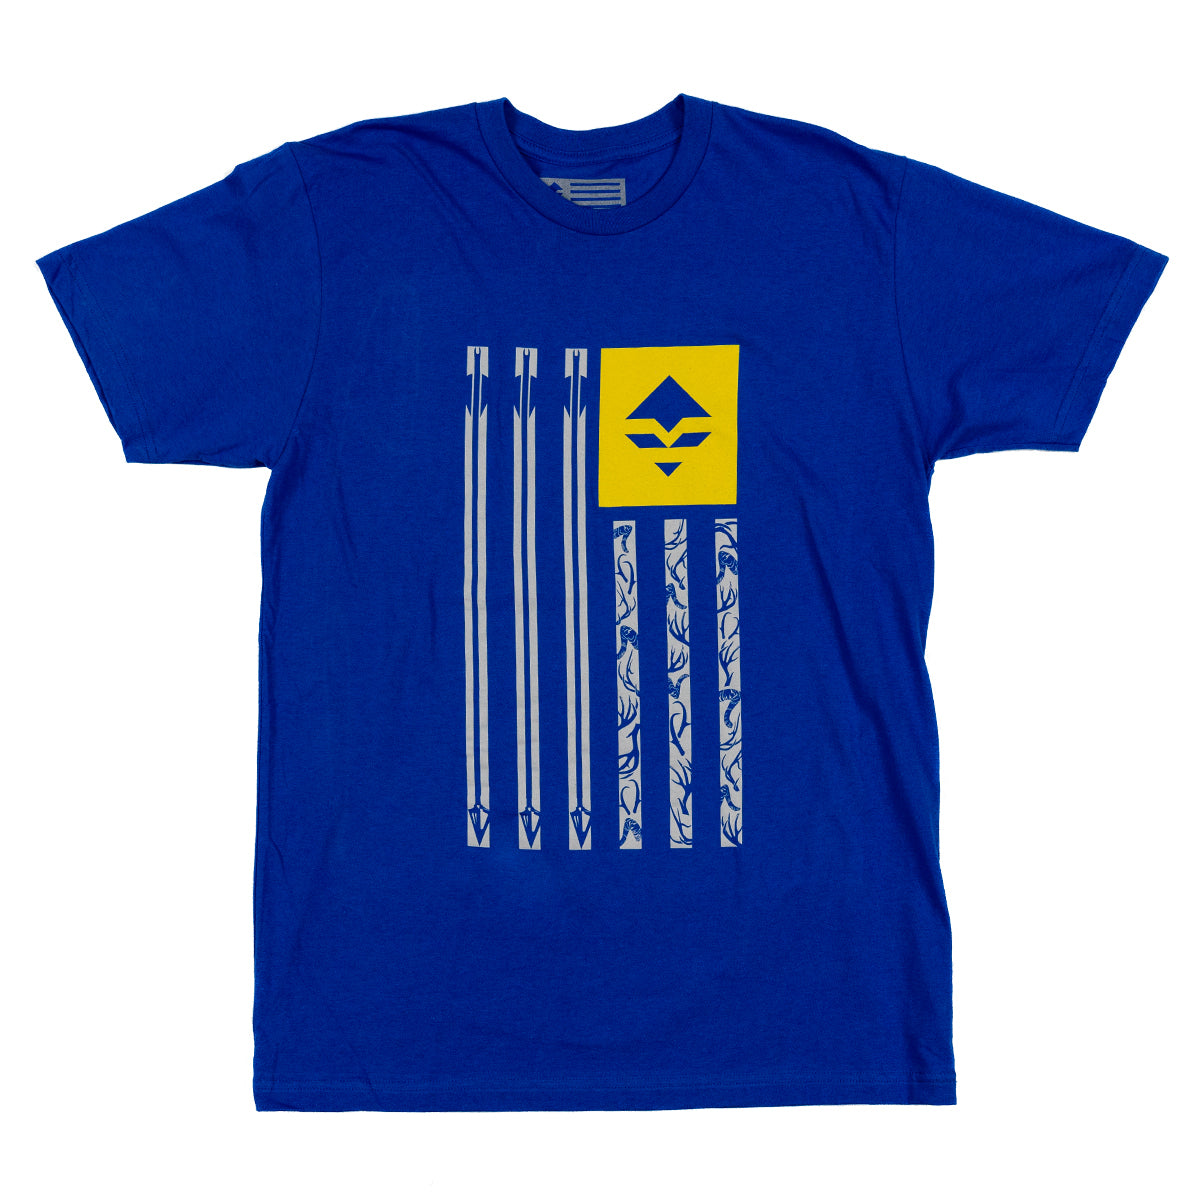 GOHUNT Bowhunt America T-Shirt in  by GOHUNT | GOHUNT - GOHUNT Shop